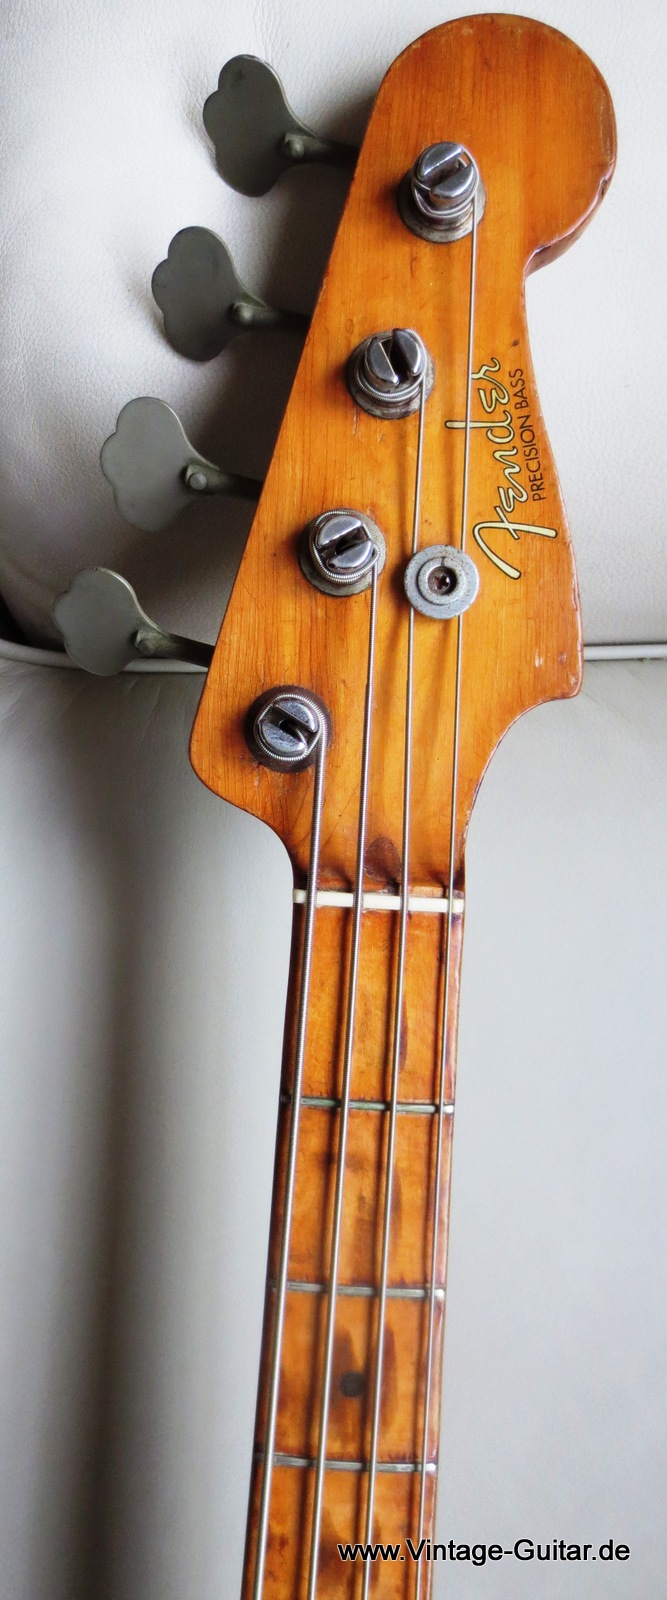 Fender_Precision_Bass_1958-anodized-pickguard-004.JPG